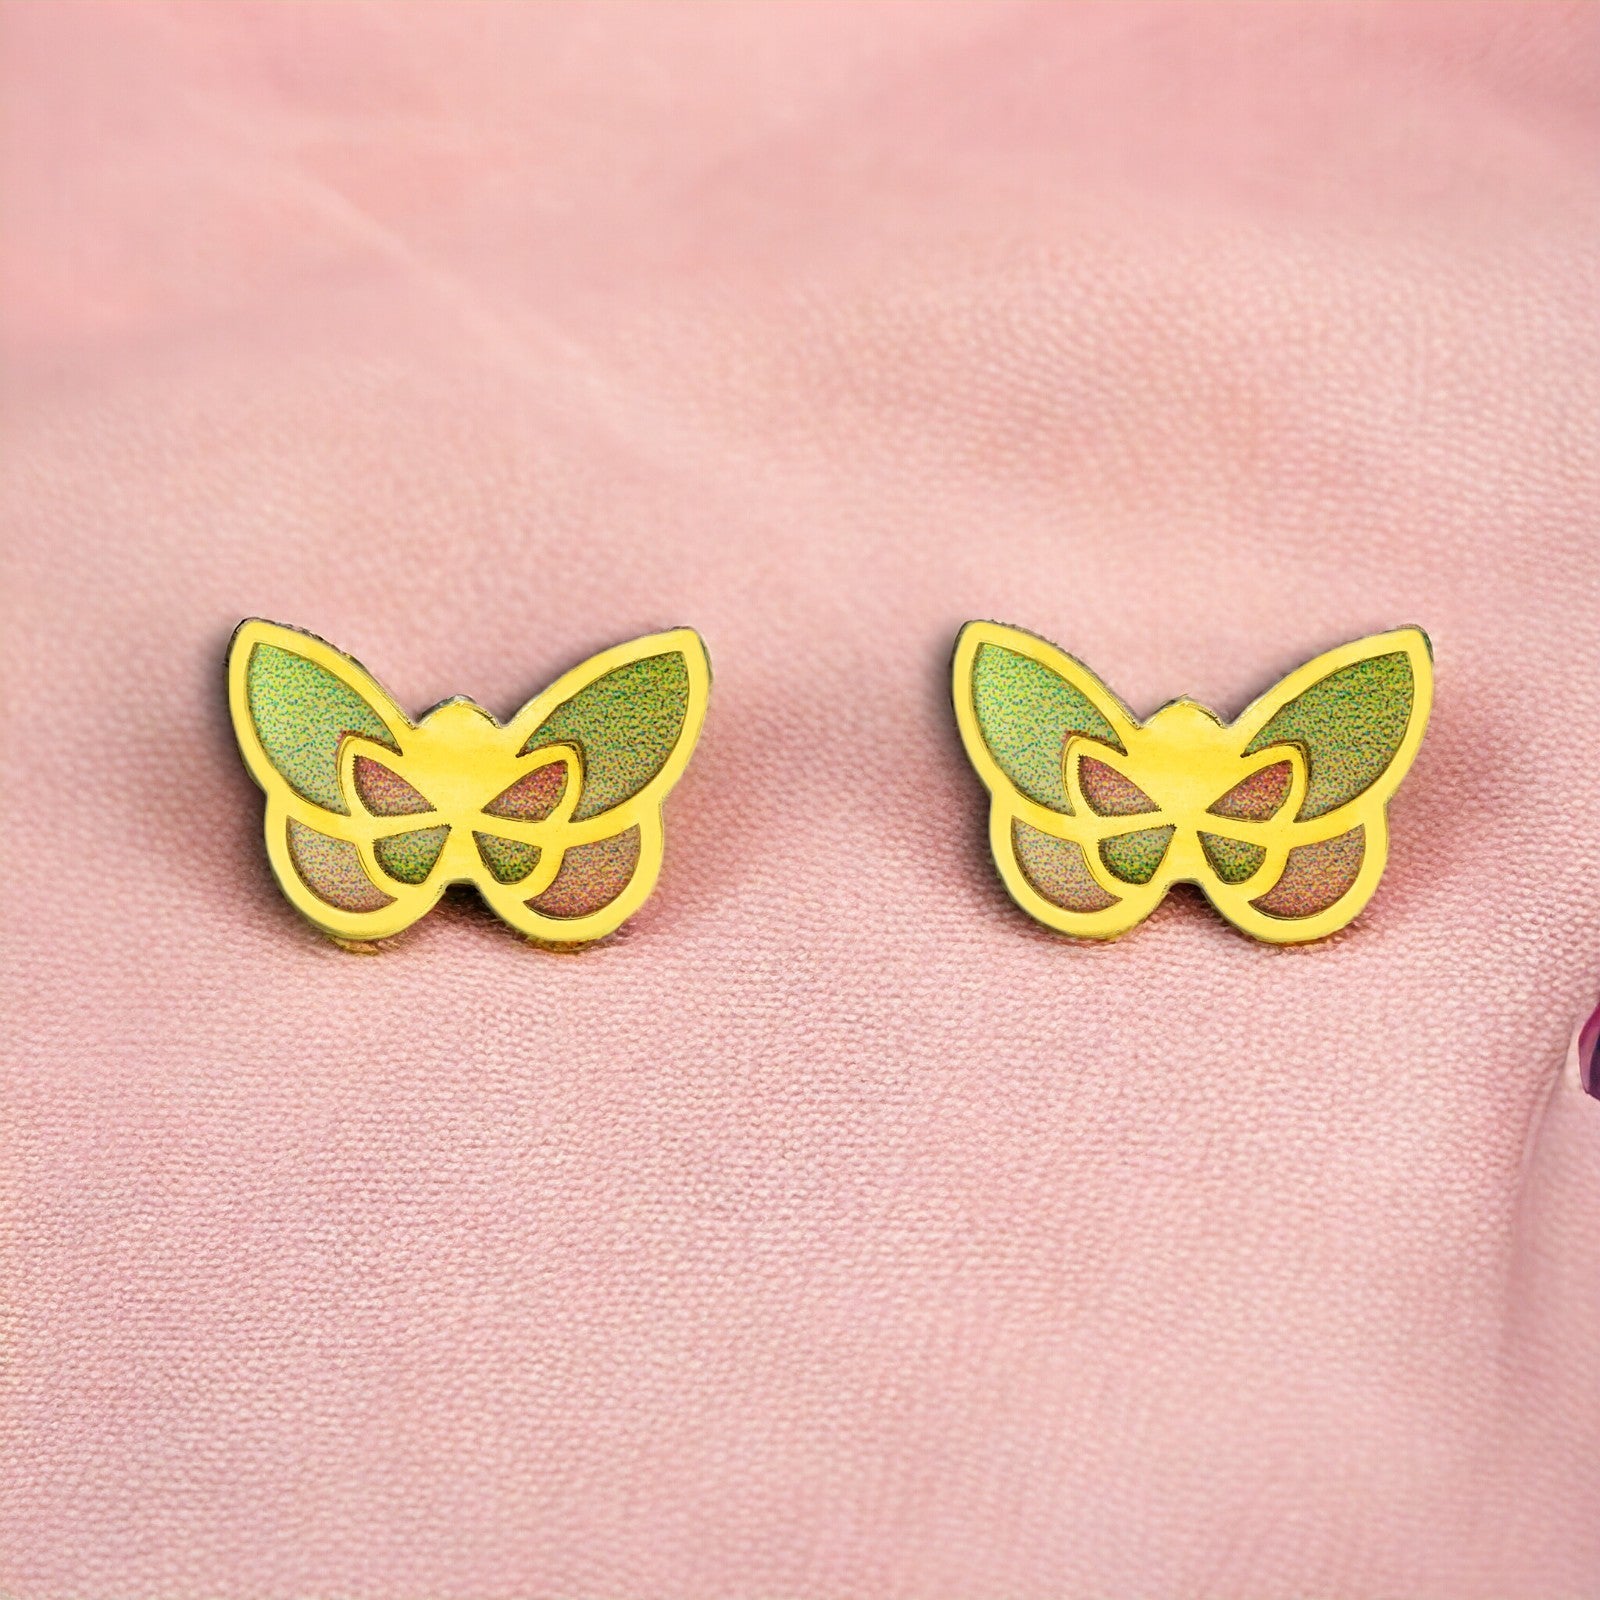 Girl's 9K Yellow Gold Earrings with Shiny Multicolor Enamel Butterfly